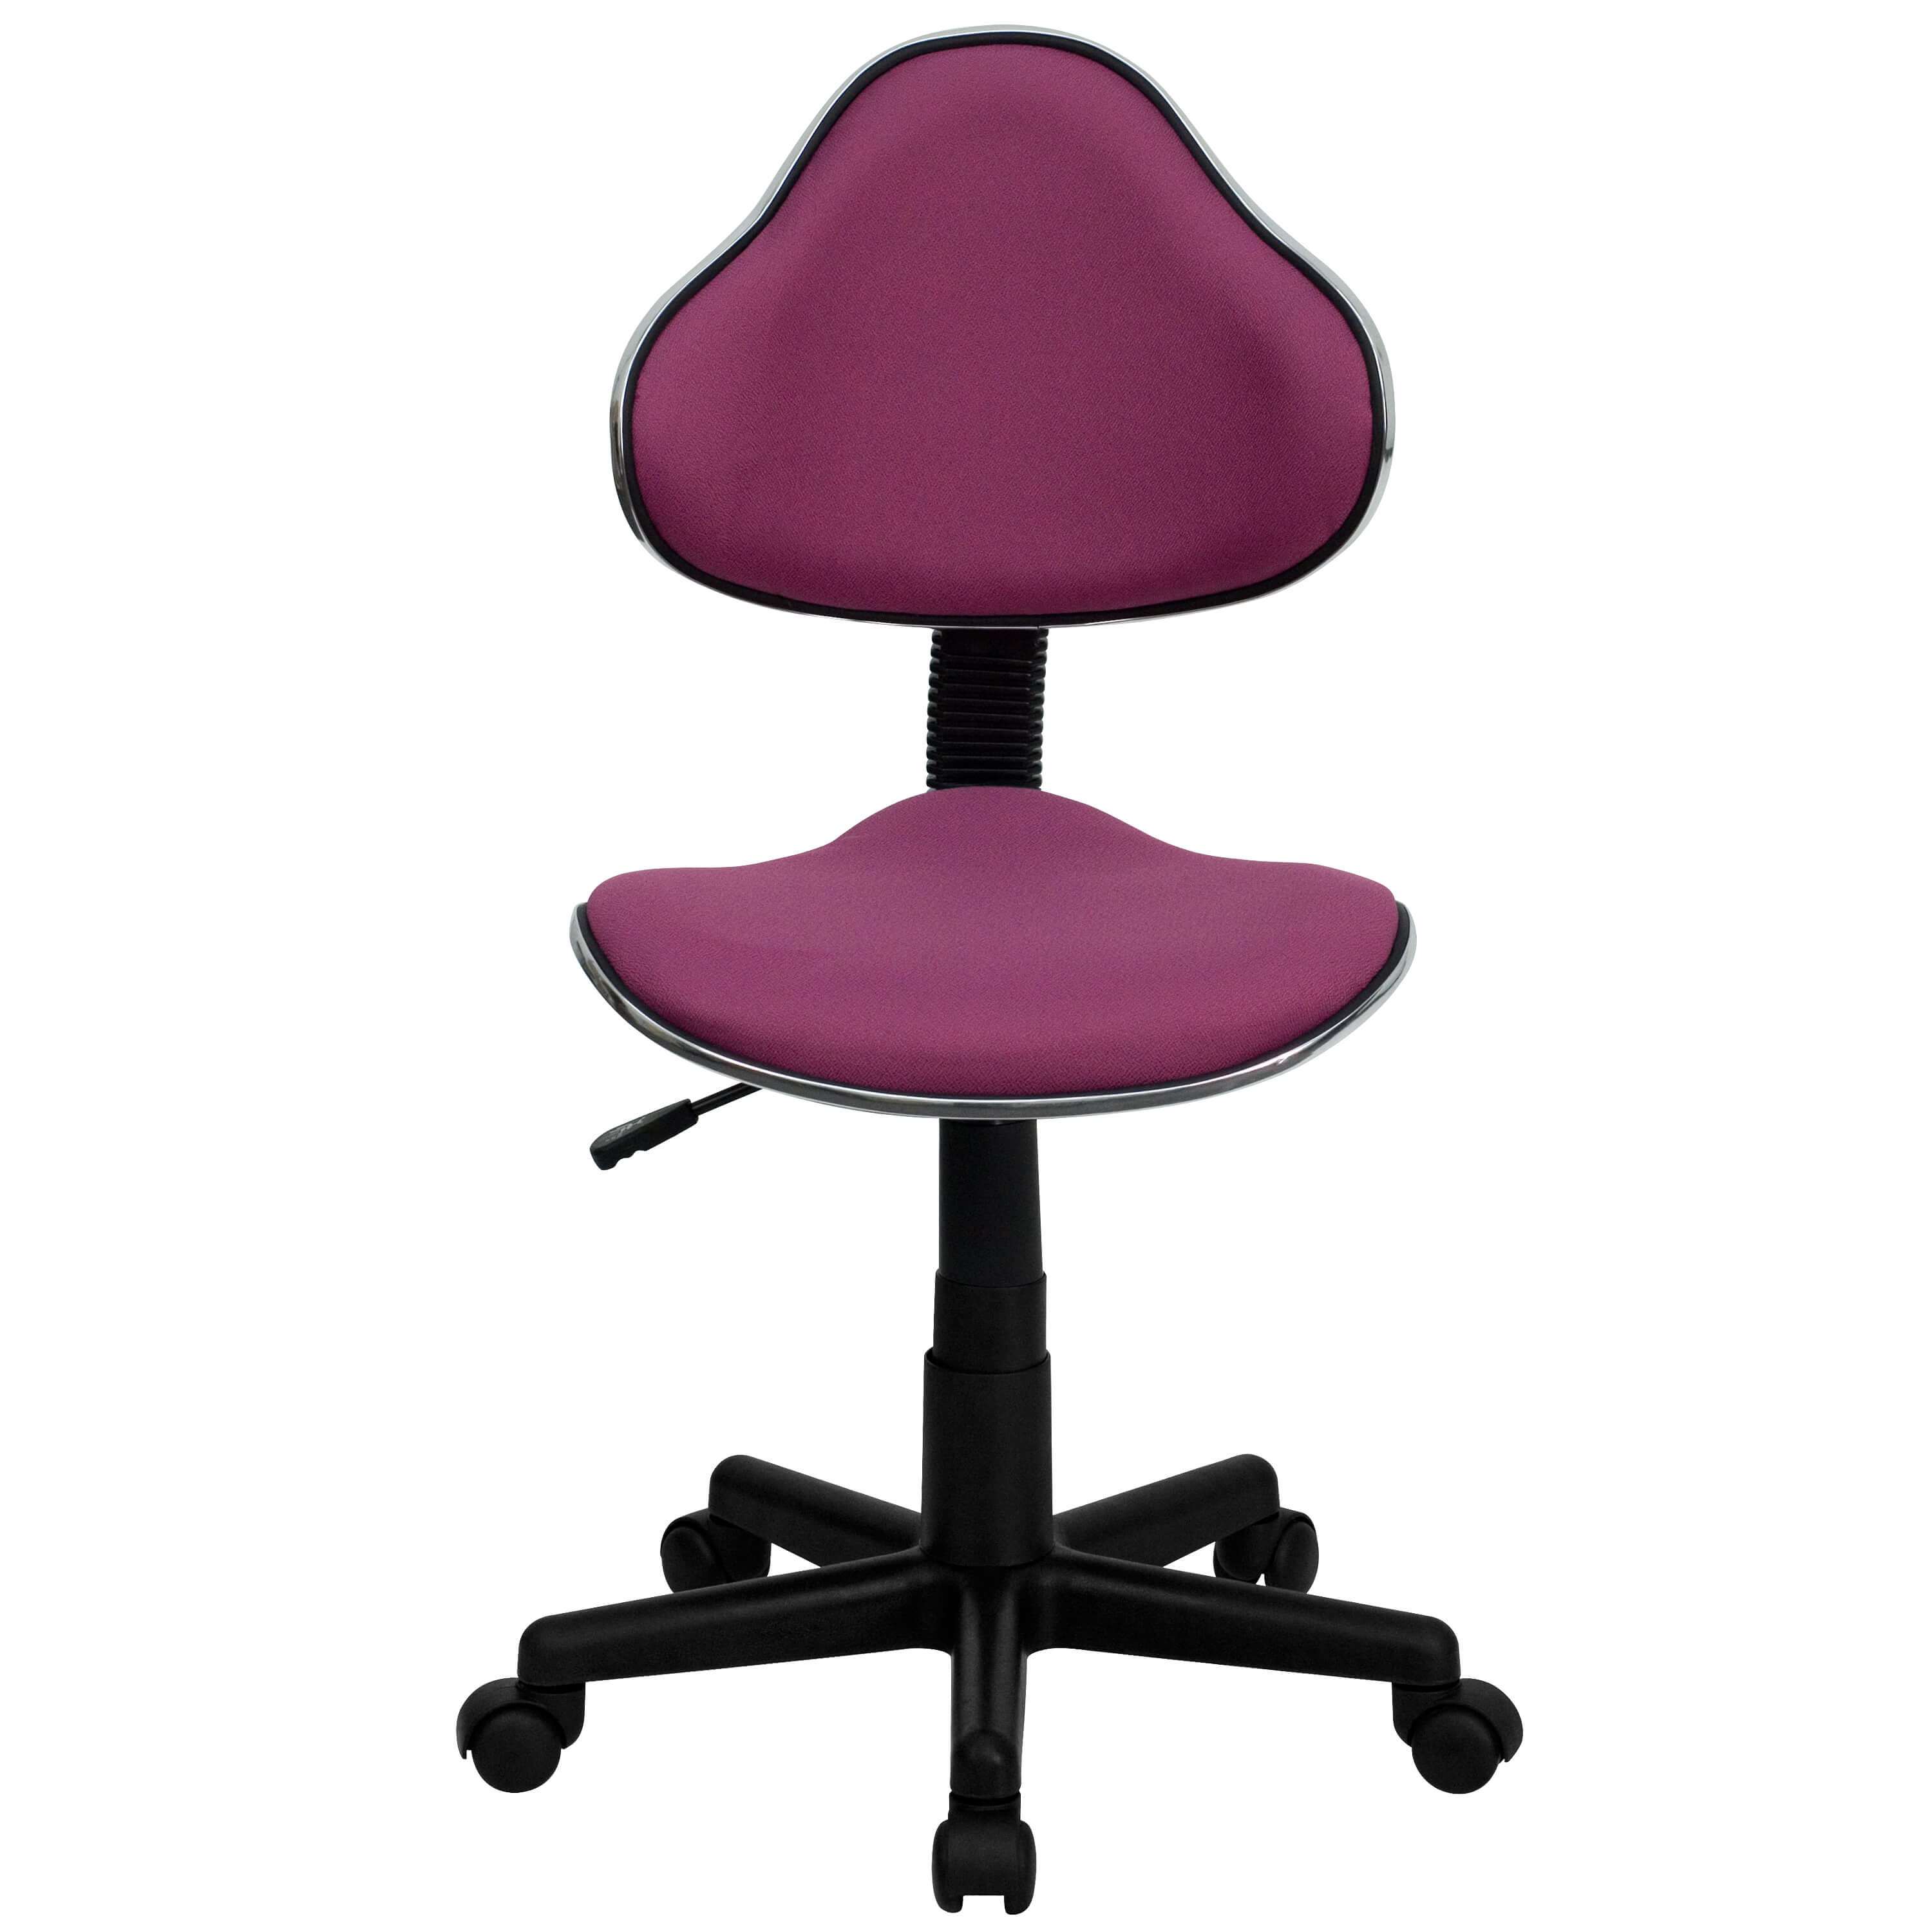 Colorful desk chairs CUB BT 699 LAVENDER GG FLA